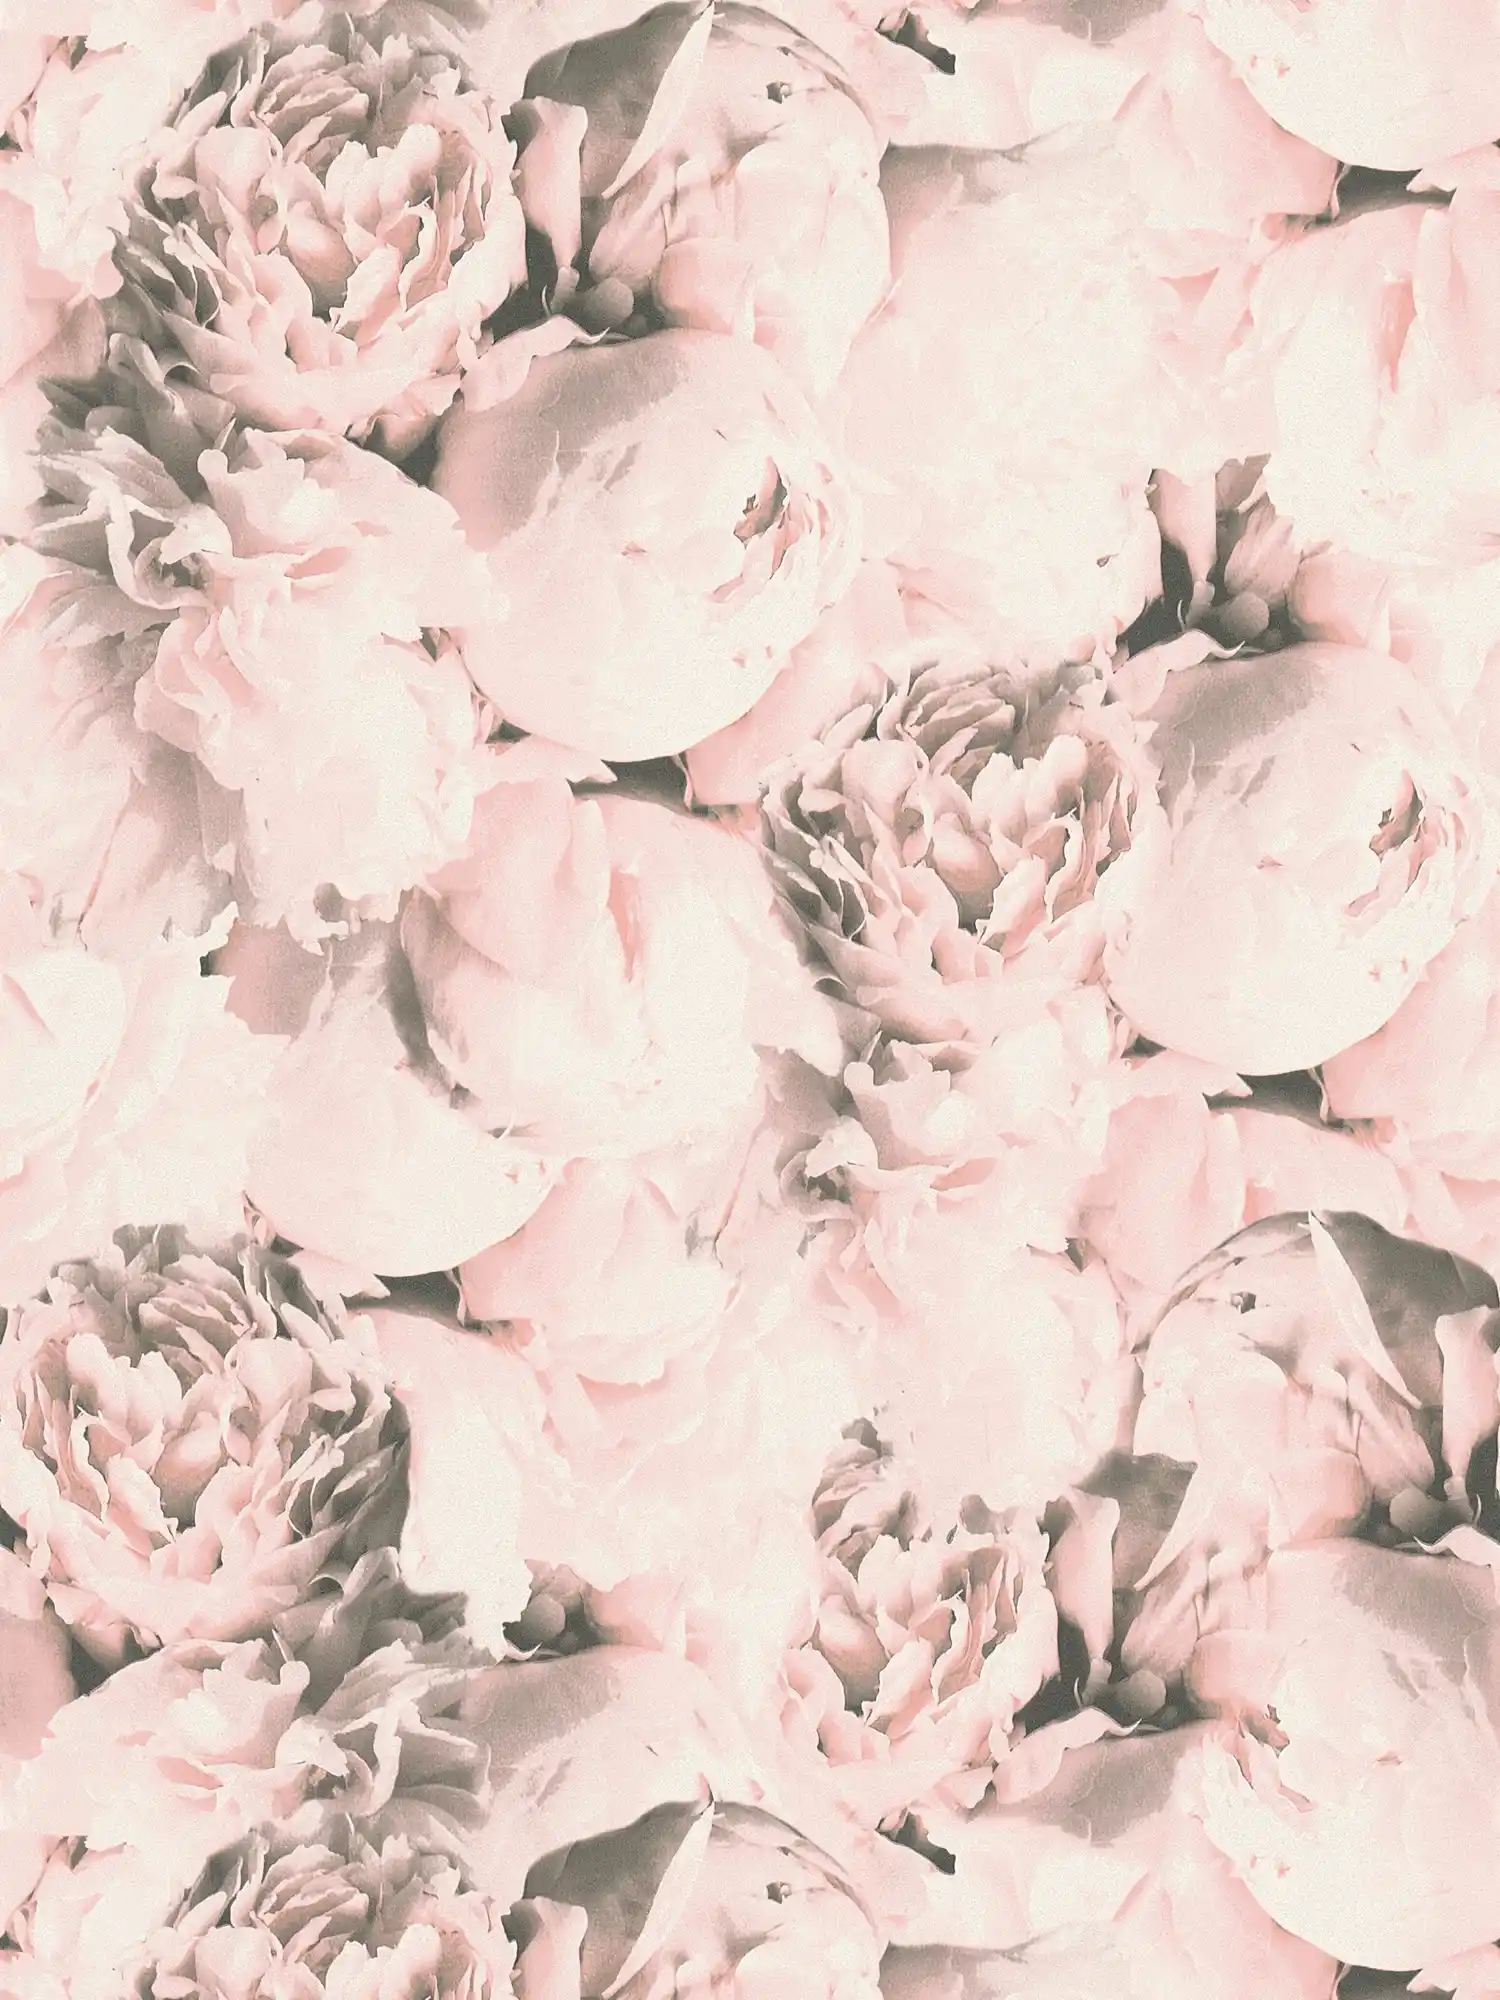 Bloemenbehang rozen met glanseffect - roze, crème
